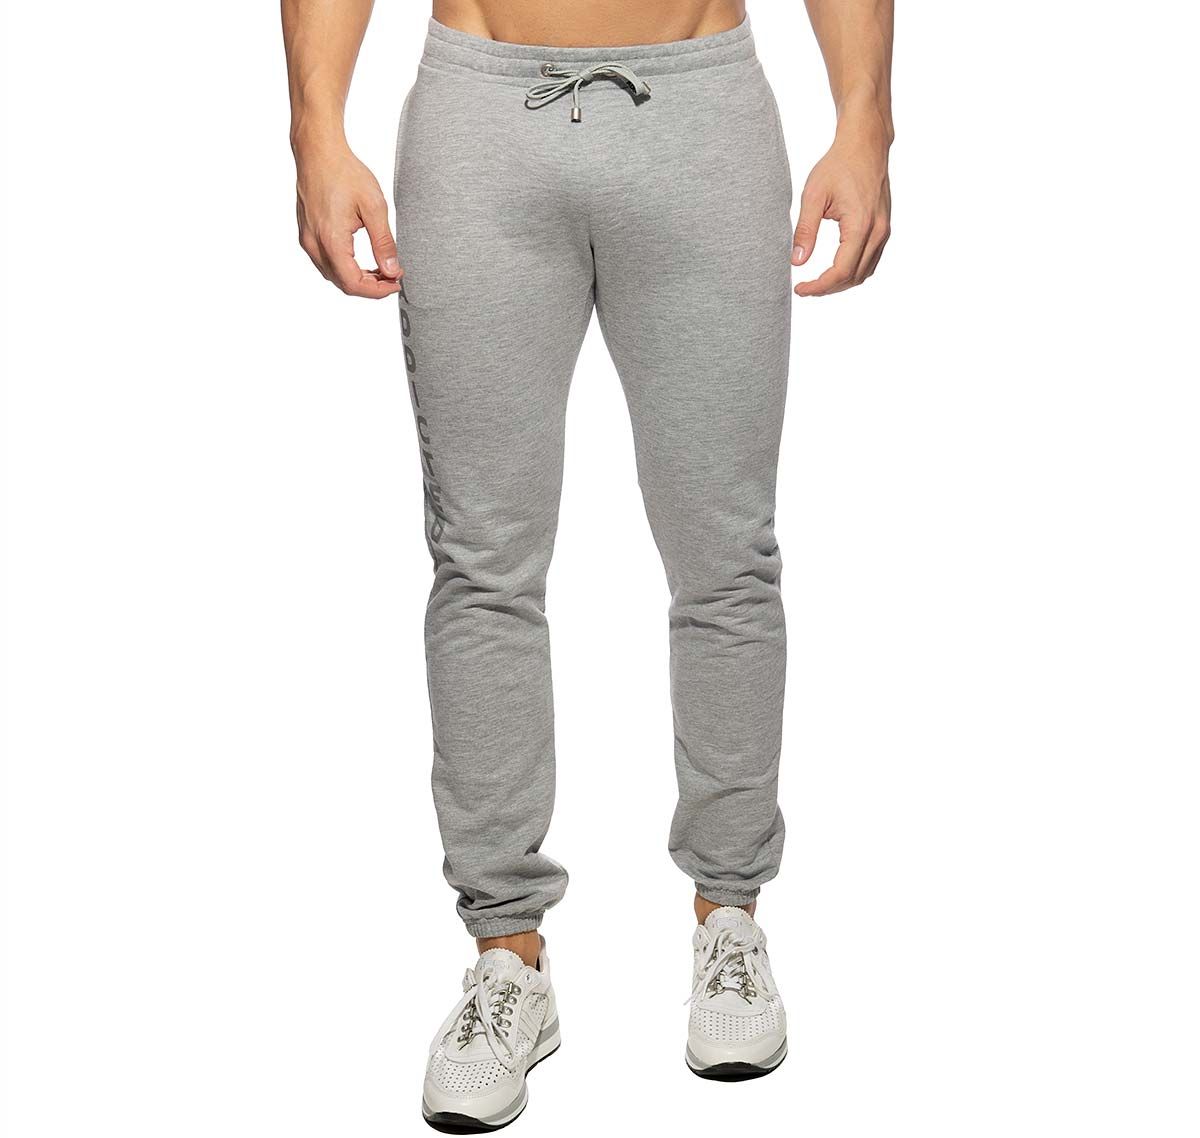 Addicted Pantaloni sportivi lunghi LONG JOGGING PANTS AD999, grigio